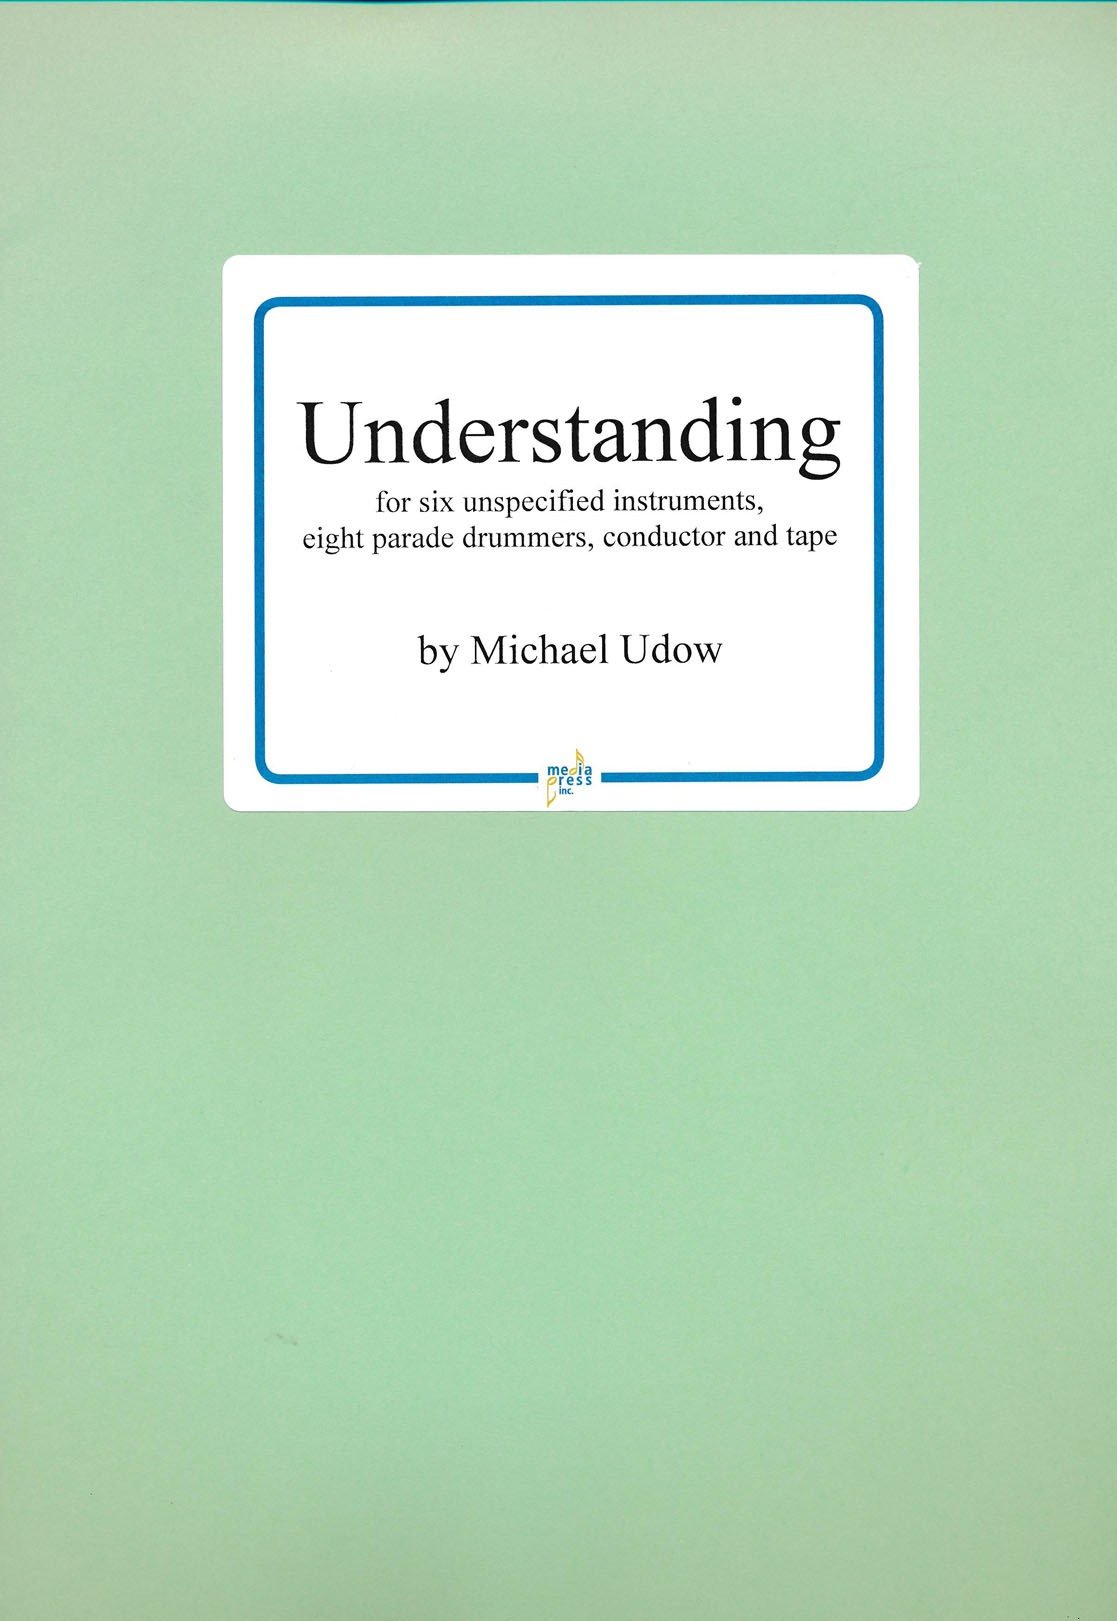 Understanding by Michael Udow